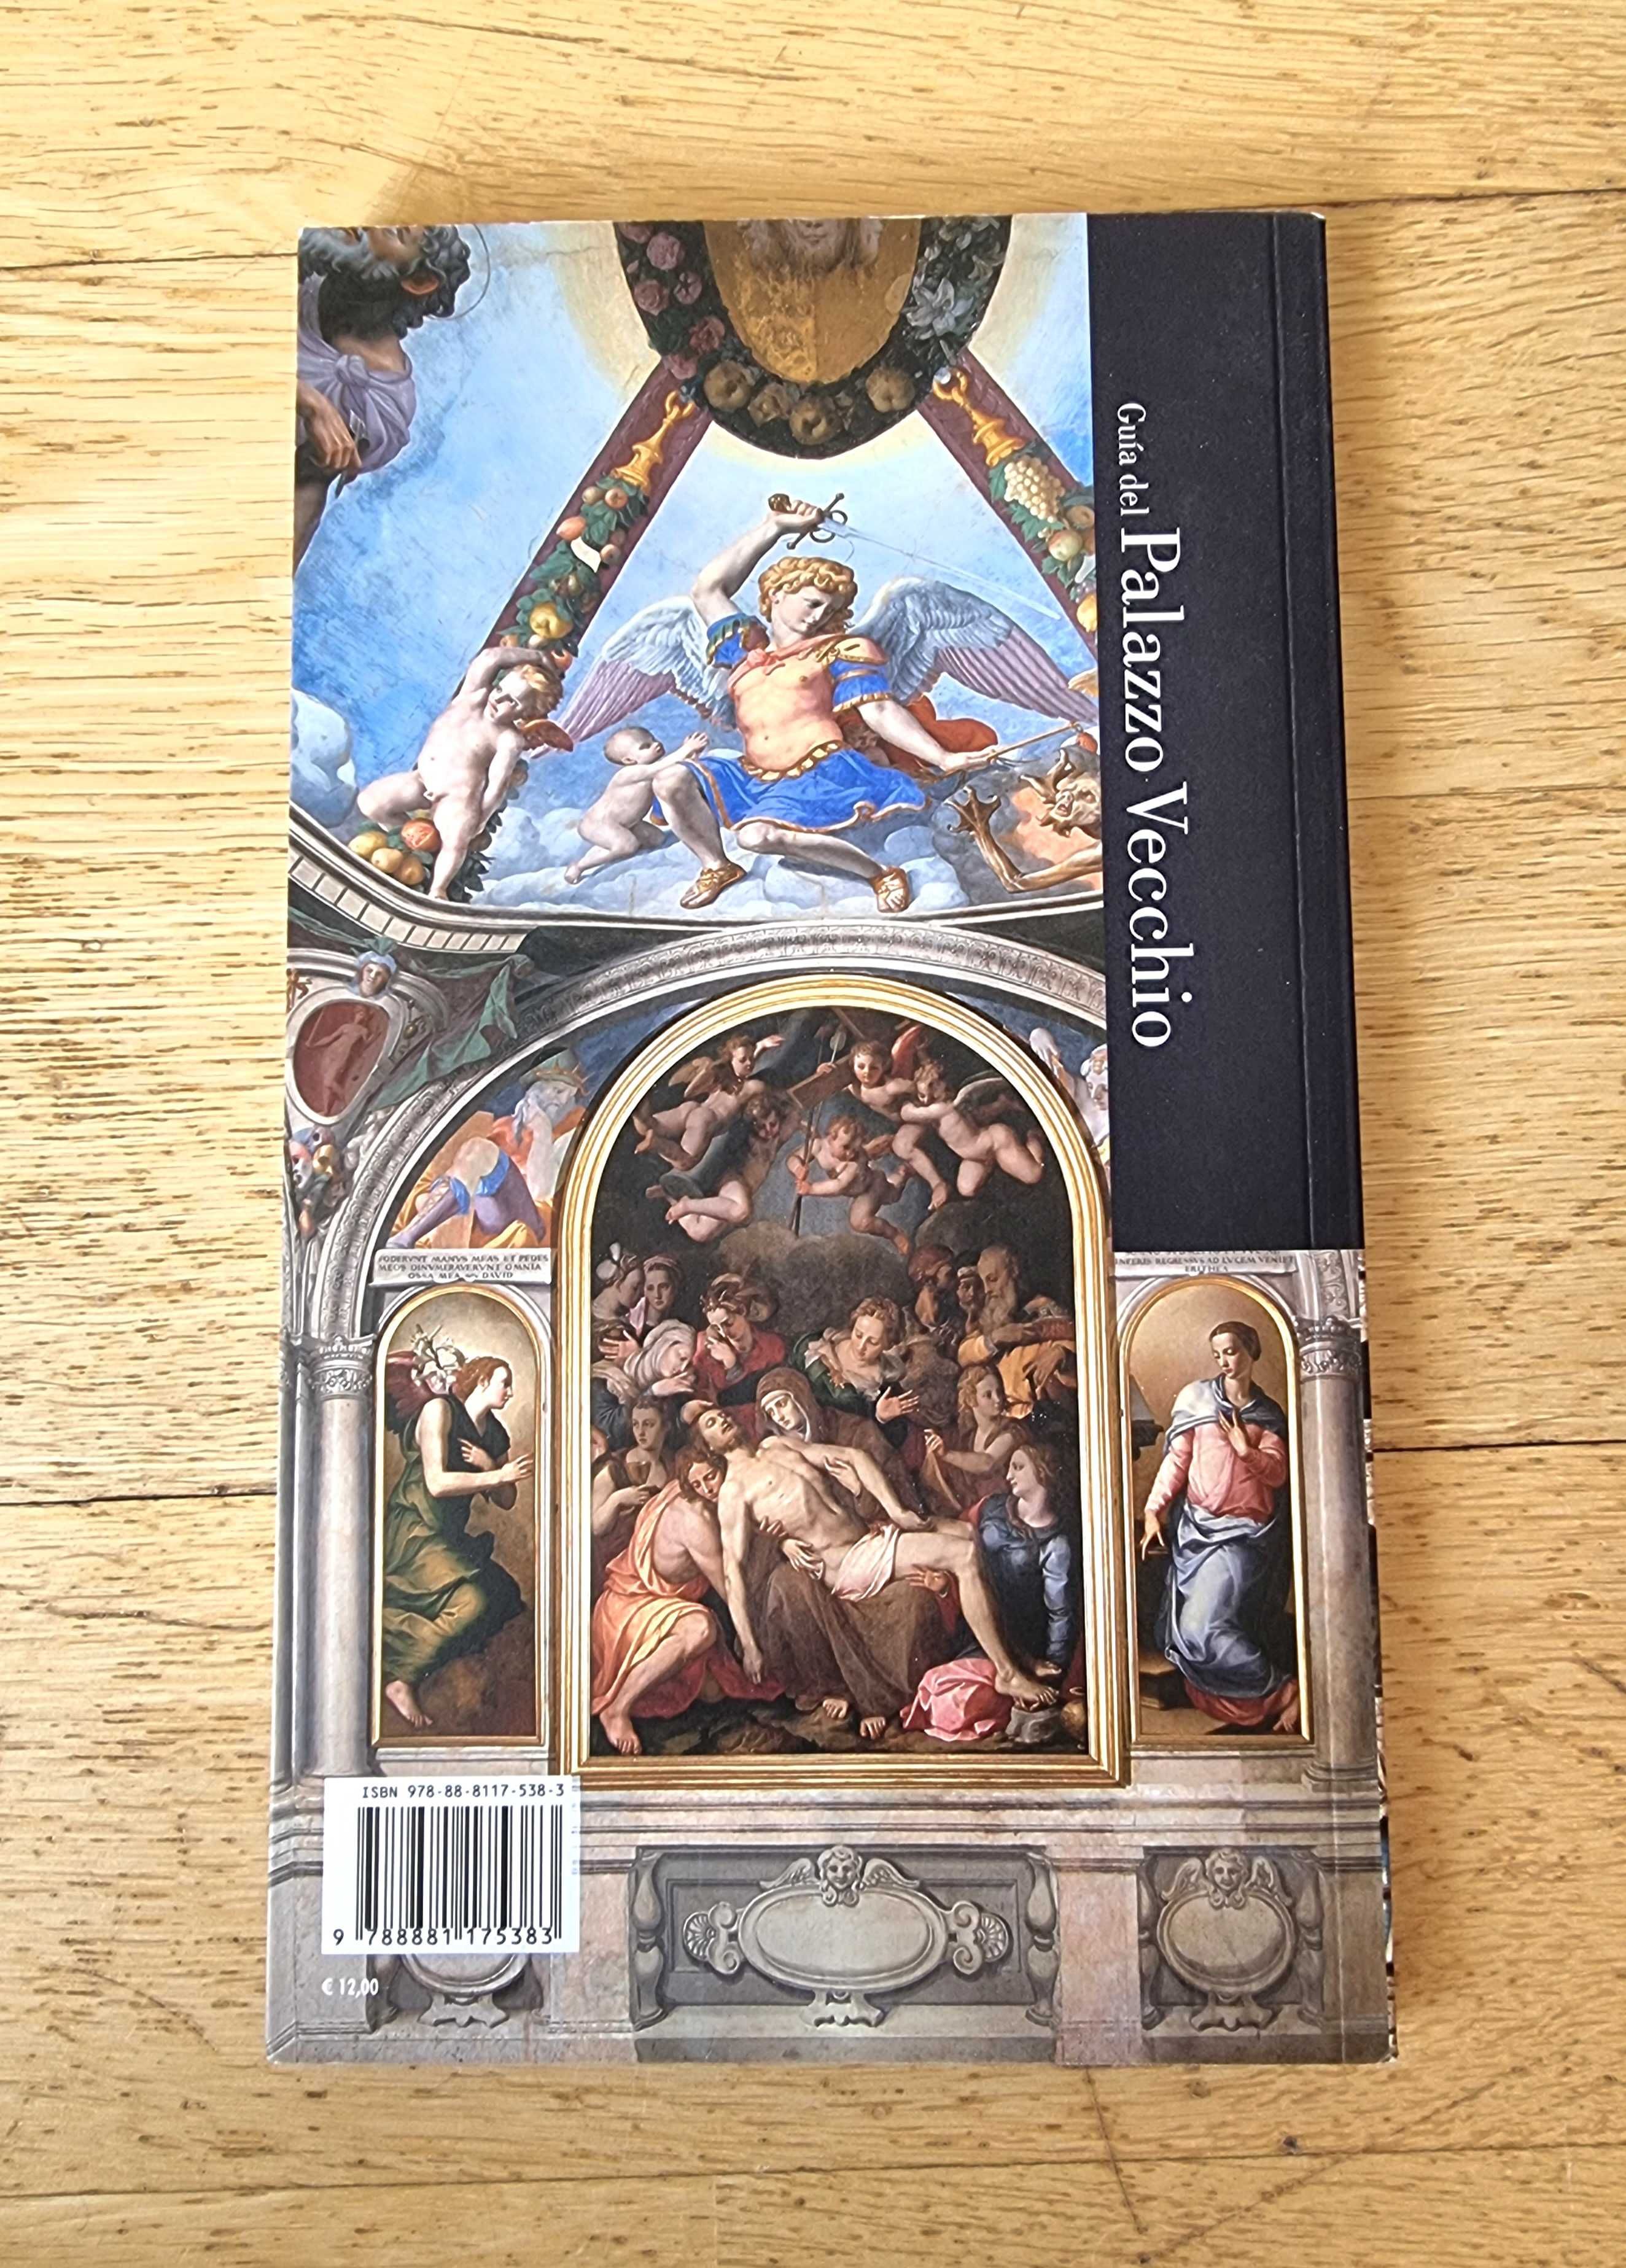 Livro "Guía del Palazzo Vecchio" (em Espanhol)